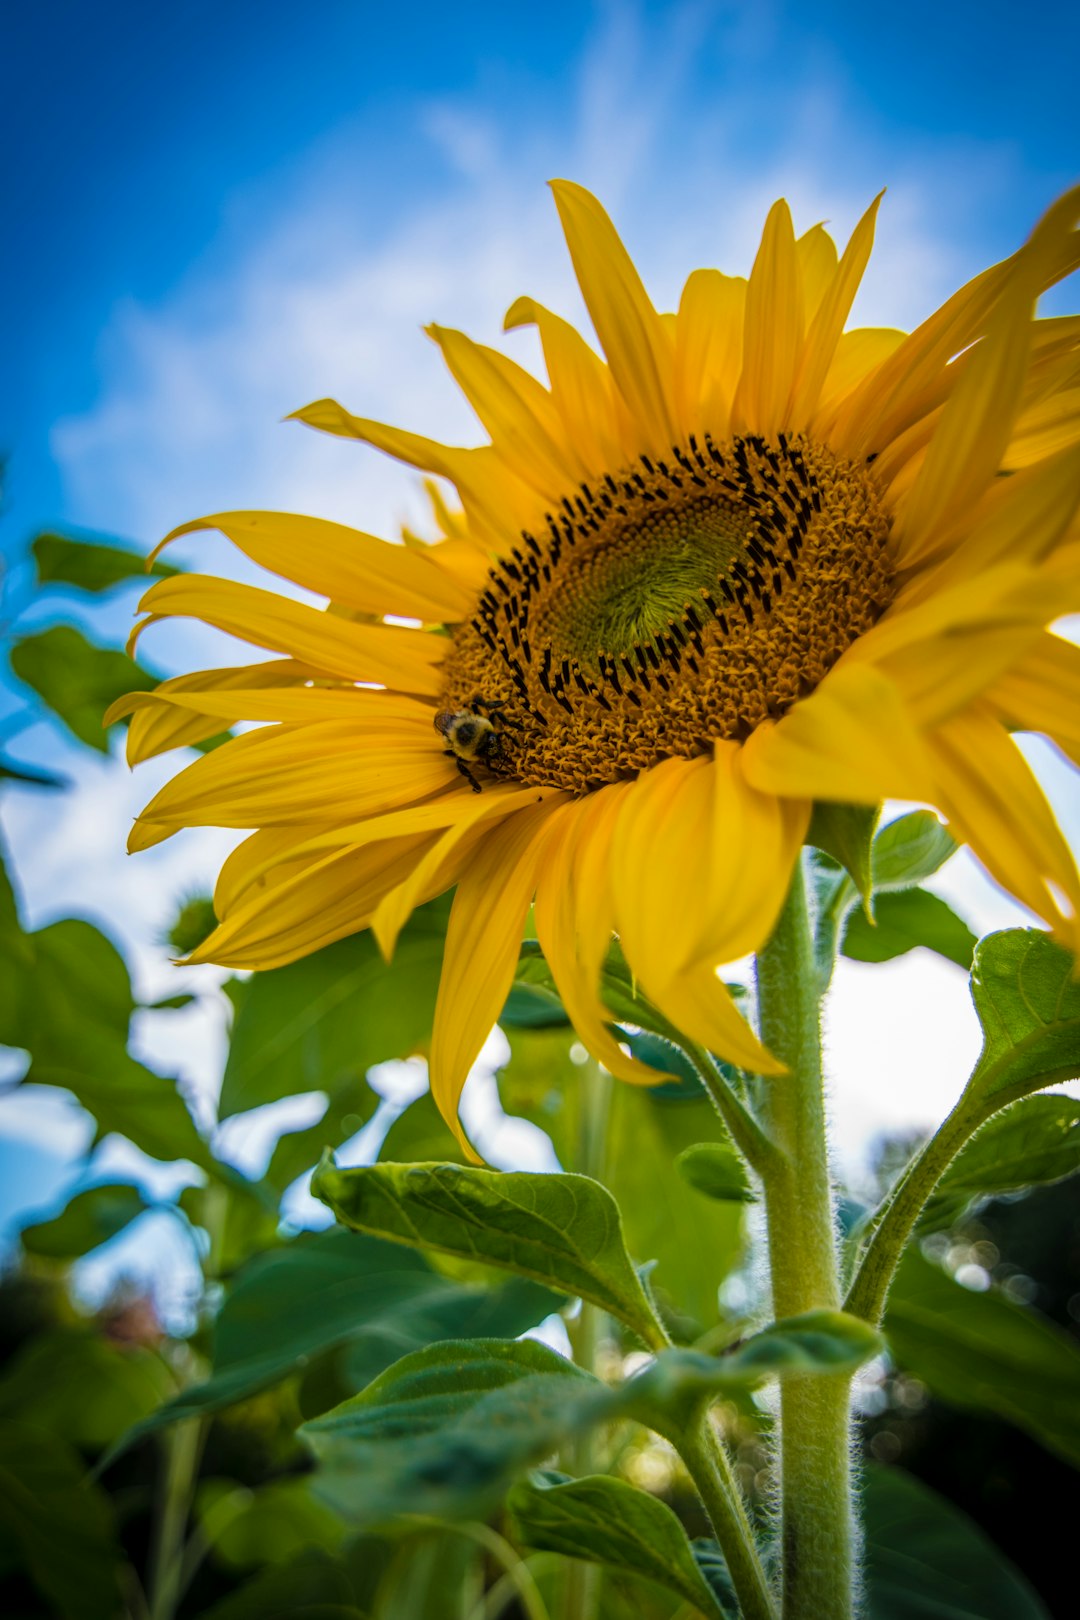 worm's-eye view of yellow sunflower photo – Free Sunflower Image on ...